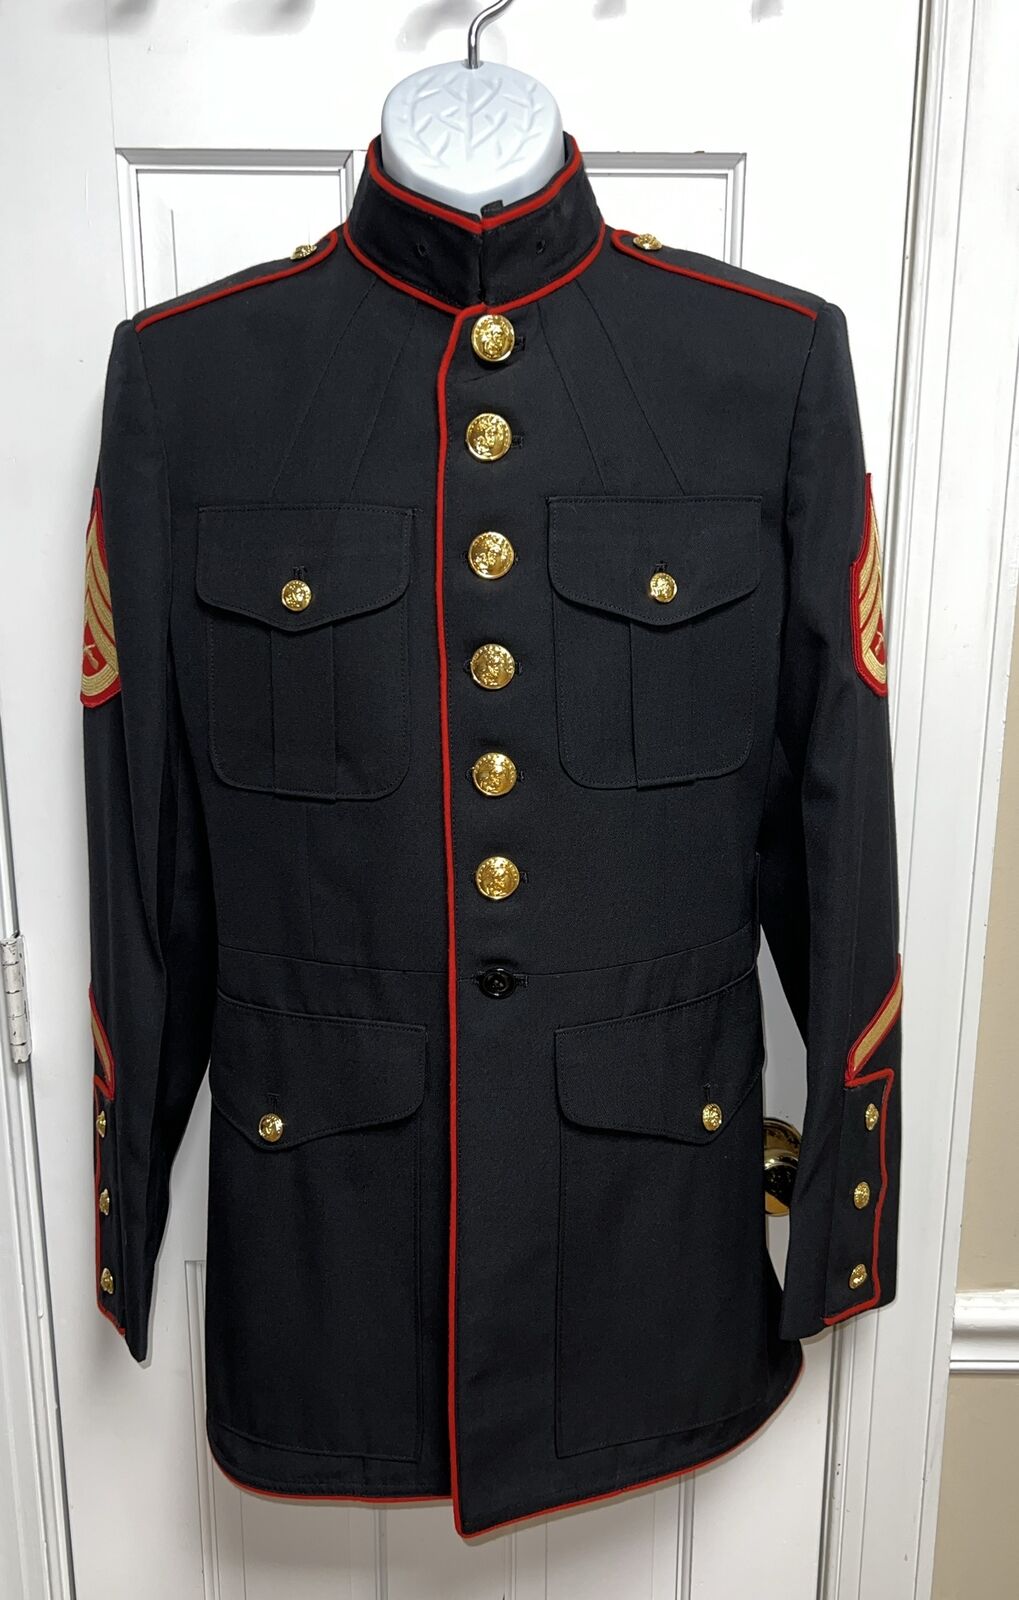 USMC U.S. Marine Corps Dress Blues Jacket, Enlisted Size 41L Altered